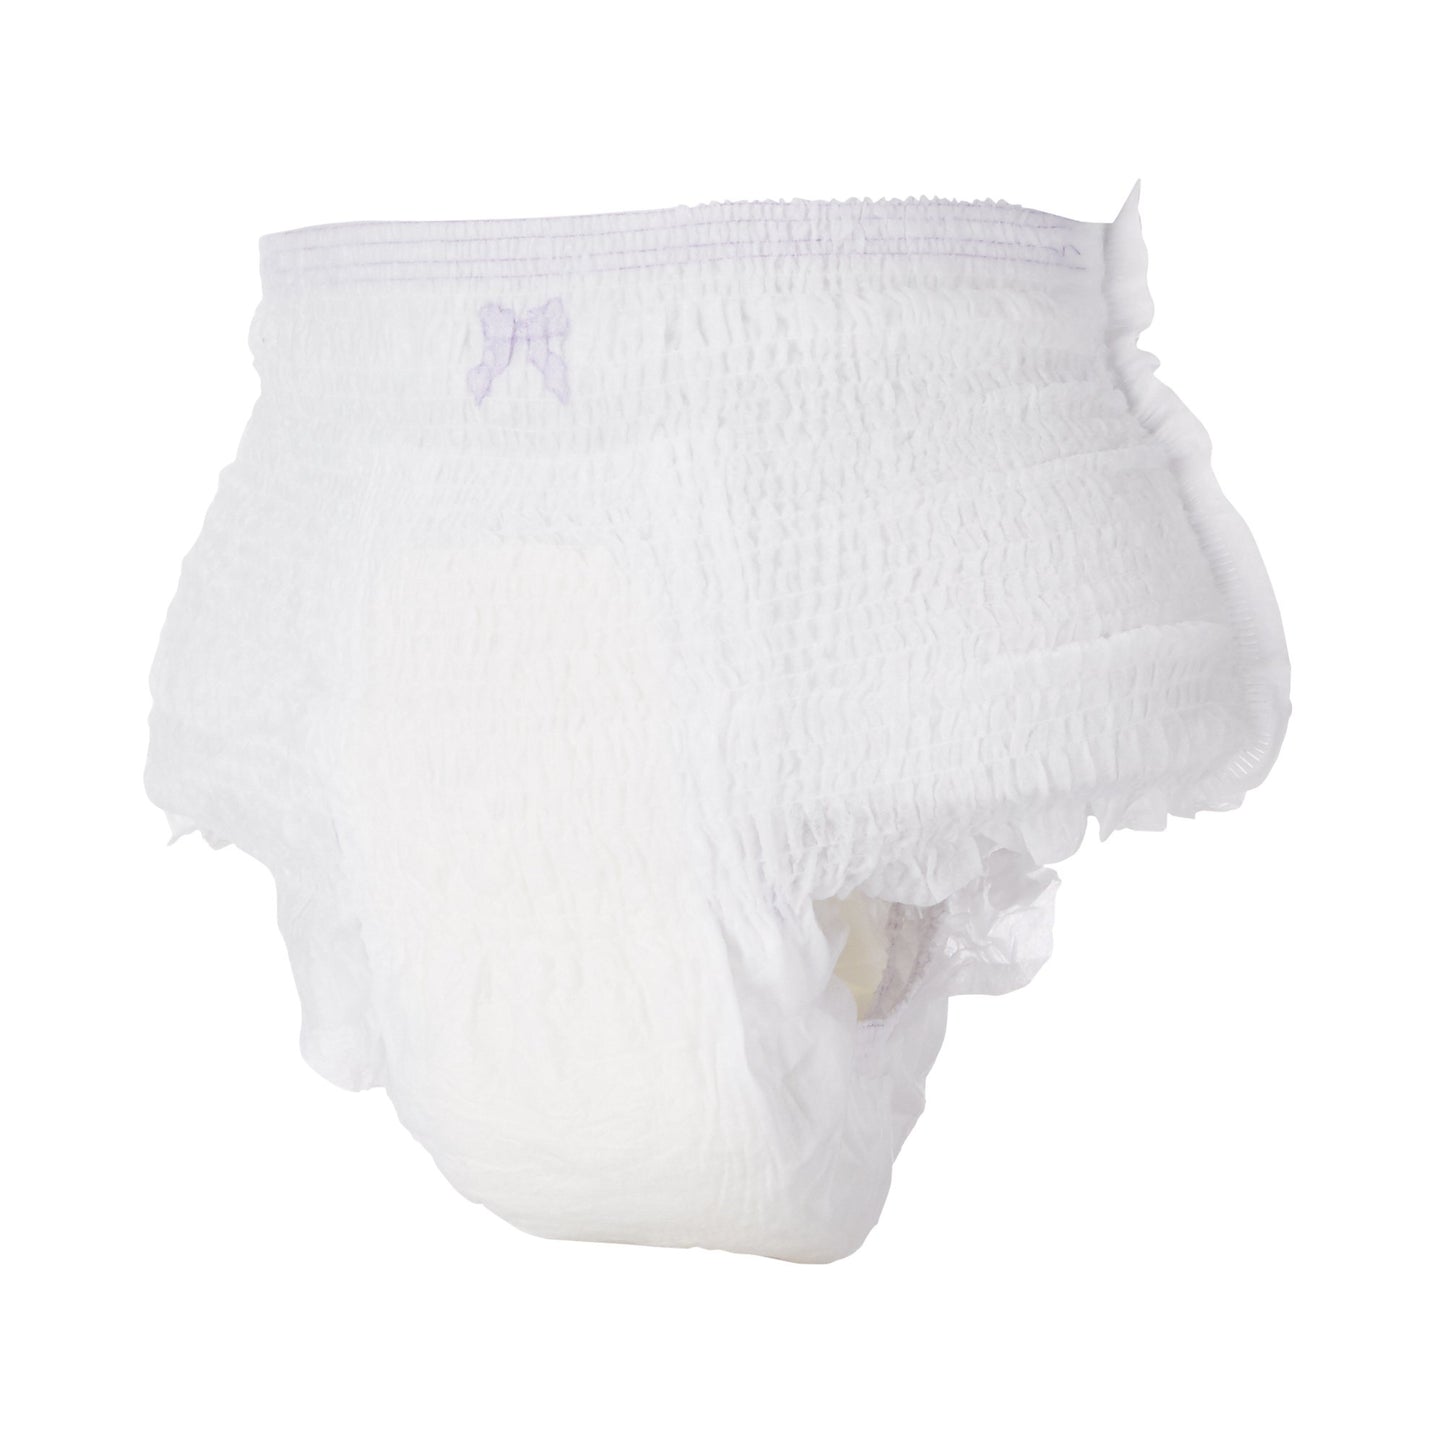 Always® Discreet Maximum Absorbent Underwear, Small / Medium, 19 ct